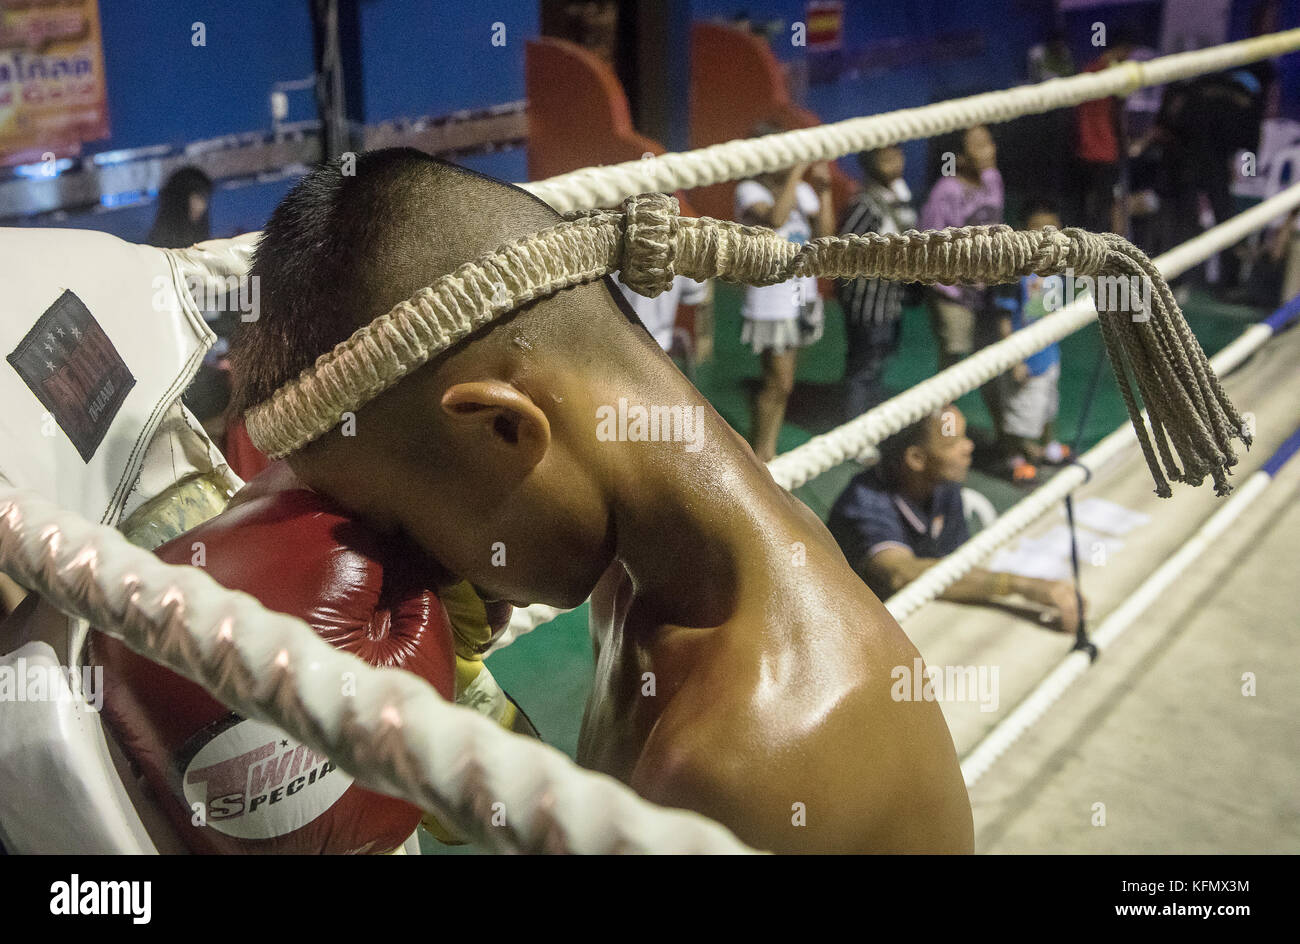 Boy muay Thai fighter through pre-fight ritual, Thailand Stock Photo